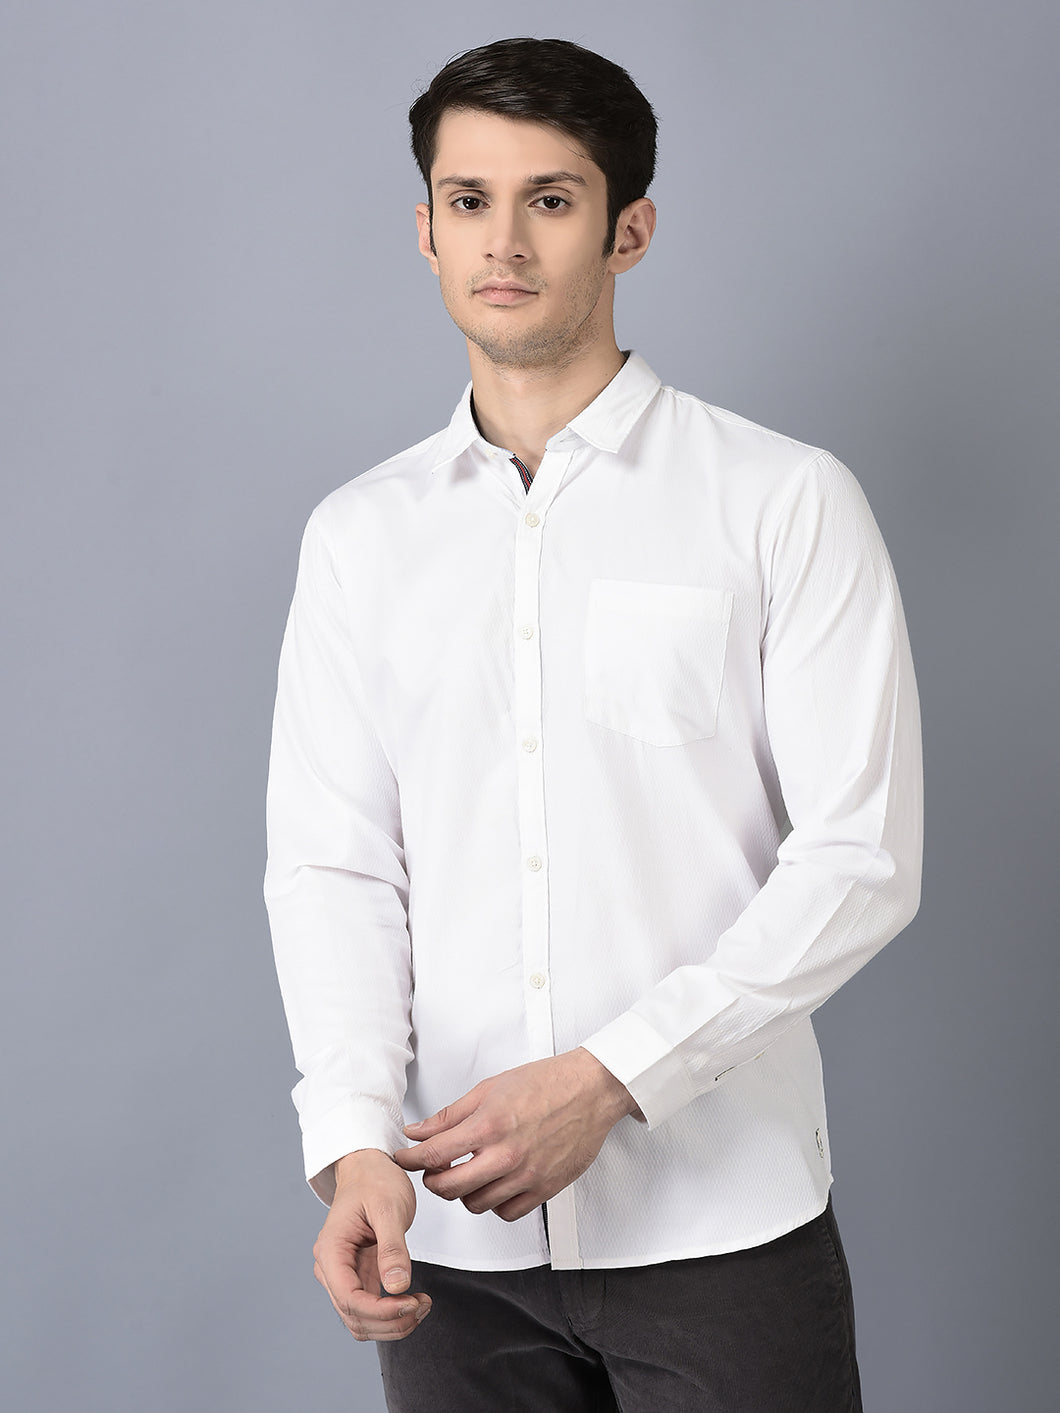 CANOE MEN Casual Shirt White Color Cotton Fabric Button Closure Self Design